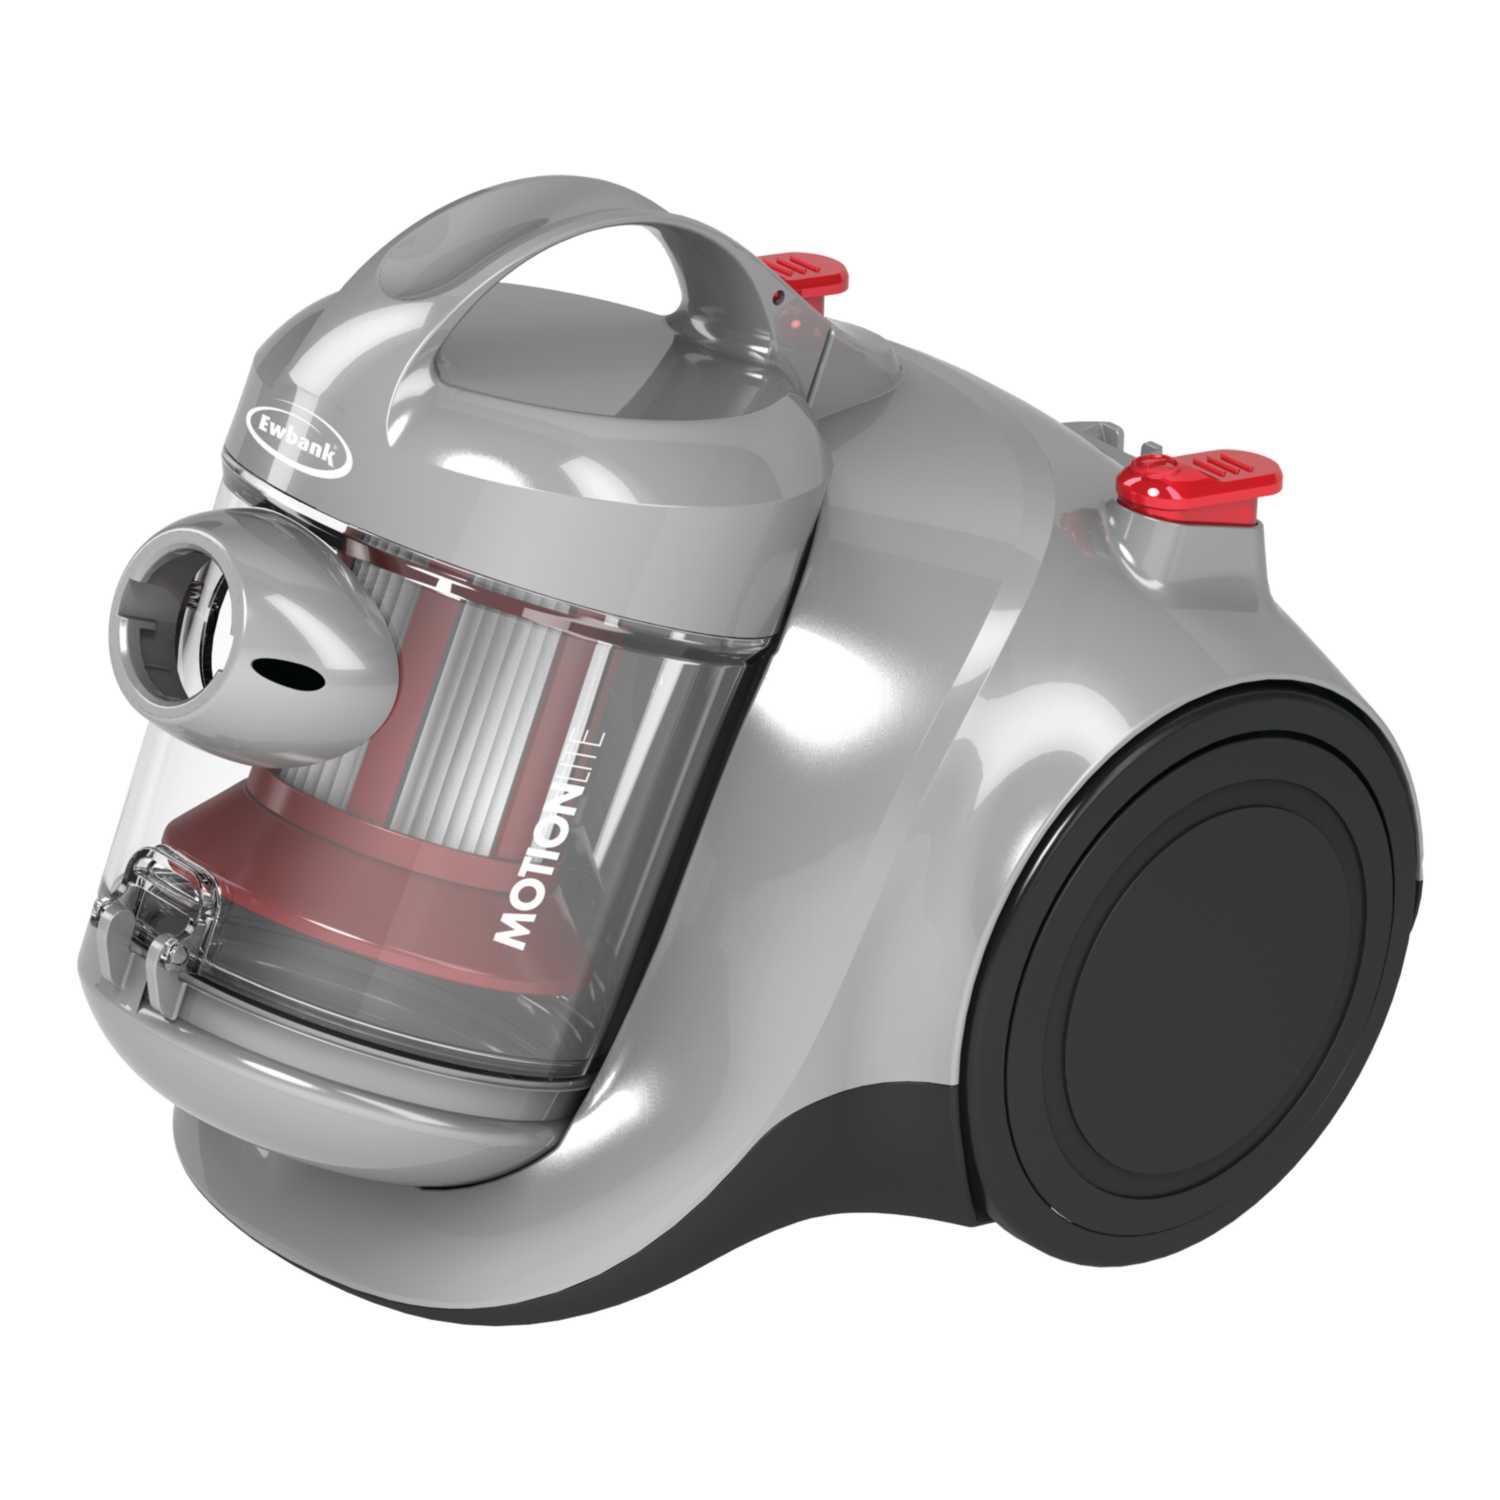 Ewbank Motionlite 700W 1.5L Bagless Vacuum Cleaner